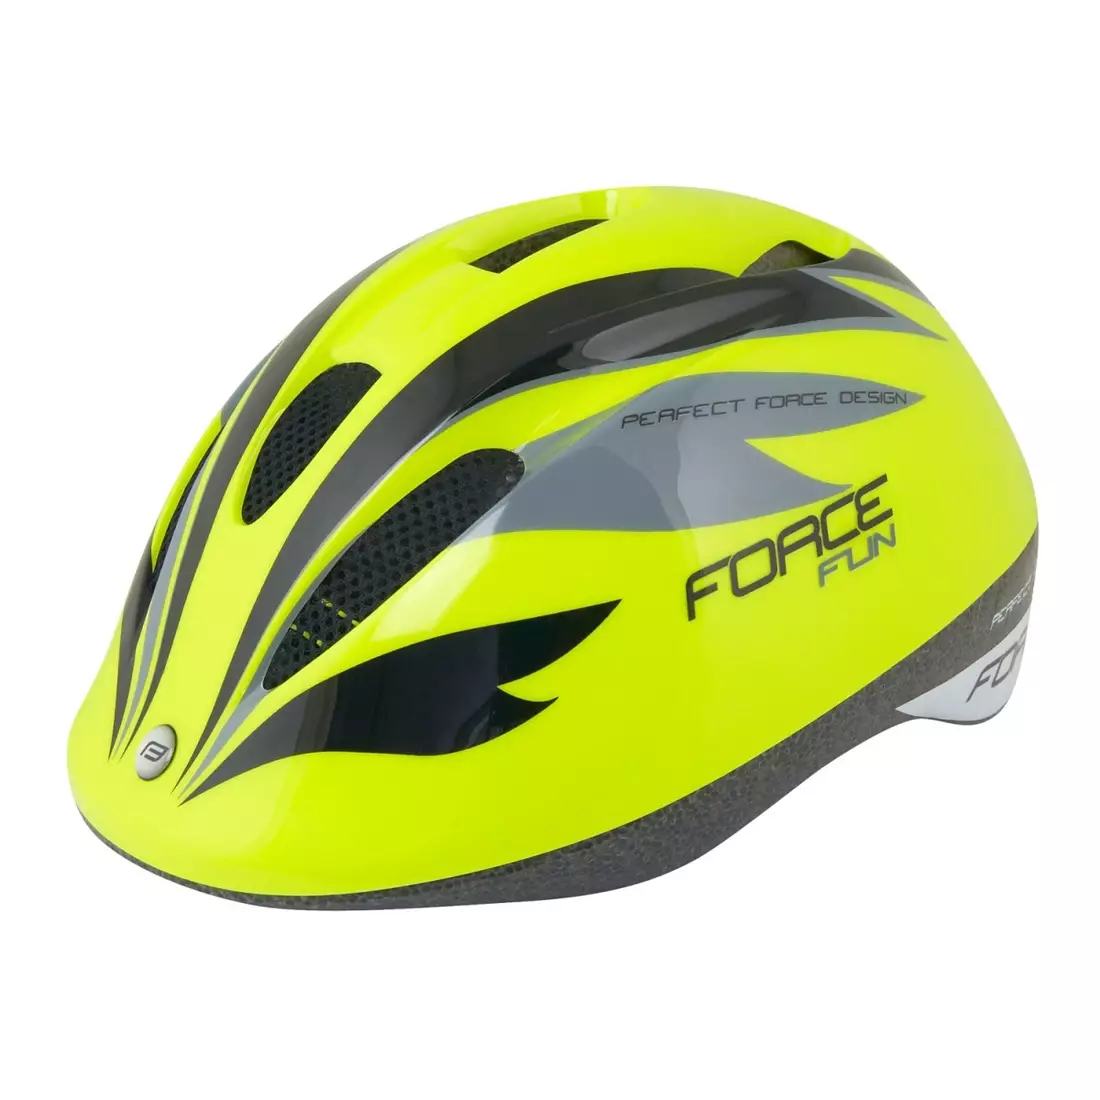 FORCE children's bicycle helmet FUN STRIPES fluor